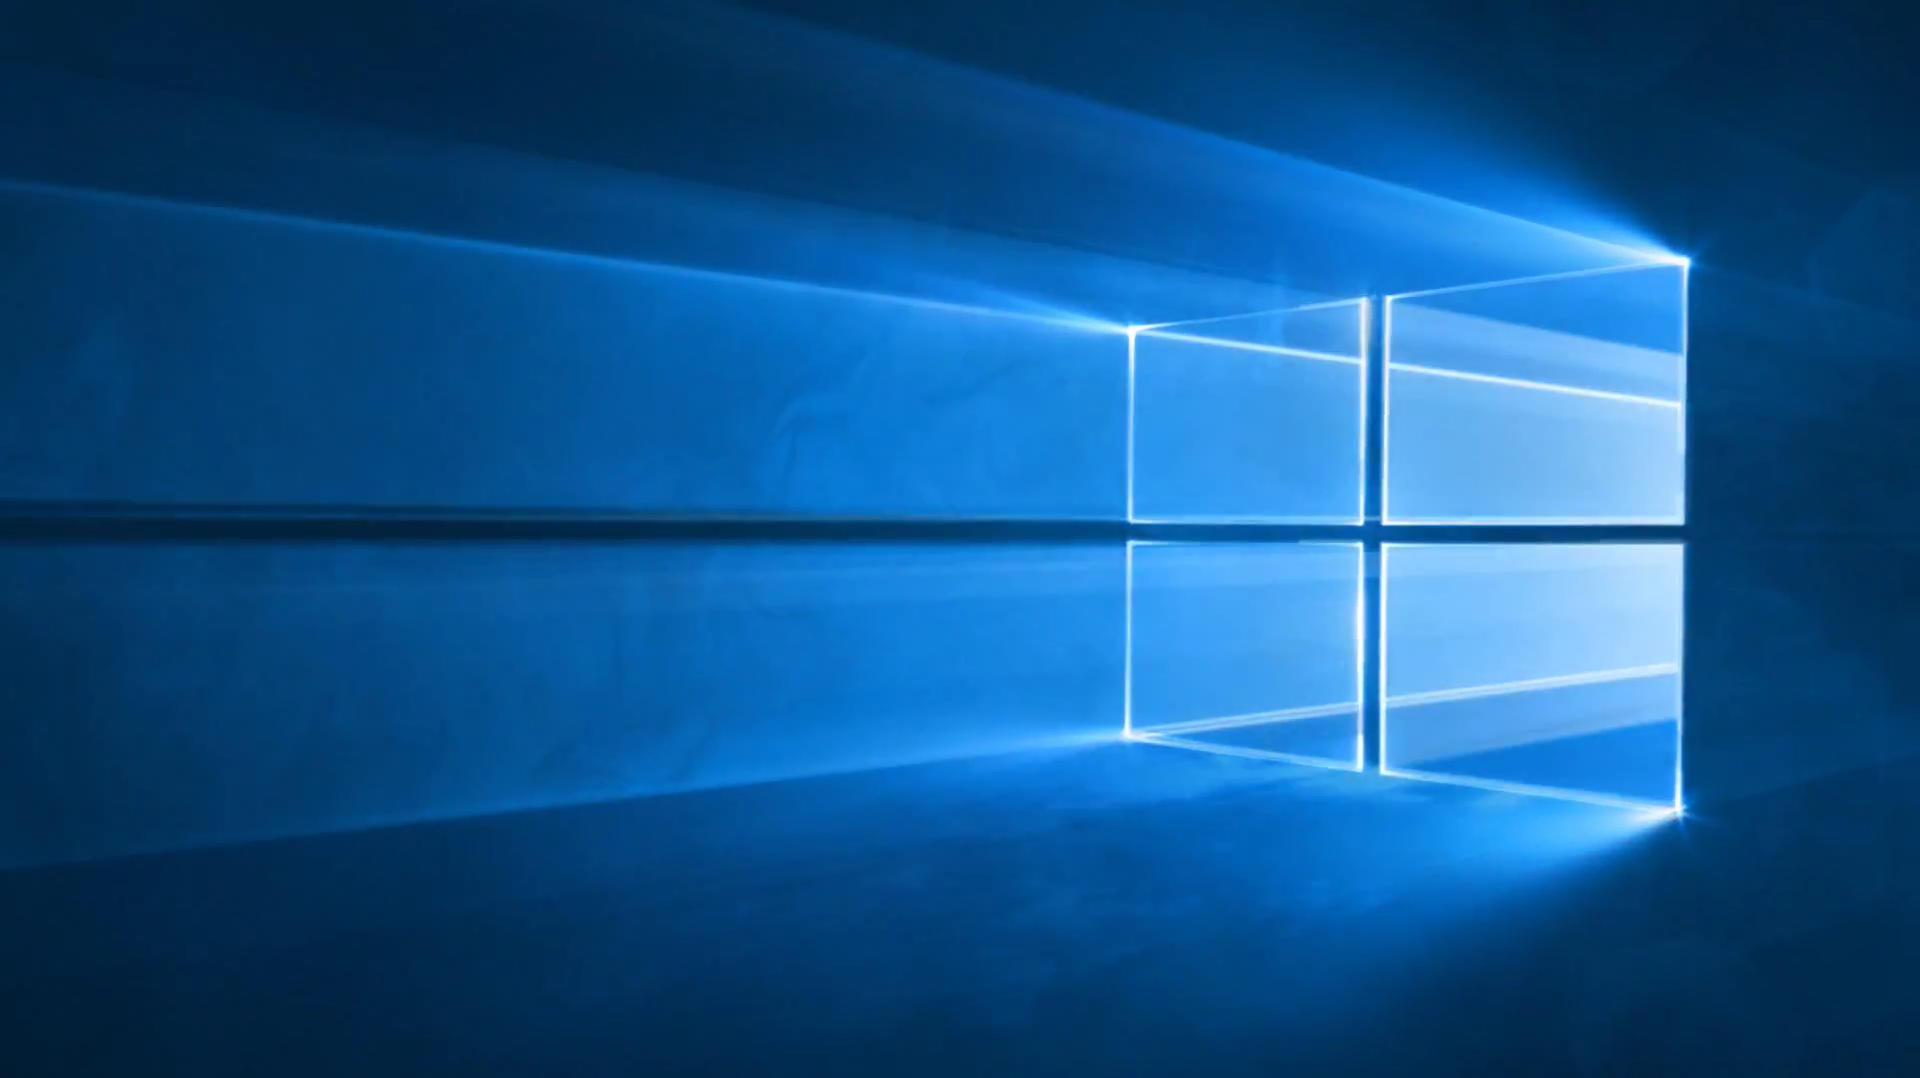  net   Microsoft showcases Windows 10 Hero wallpaper made from light